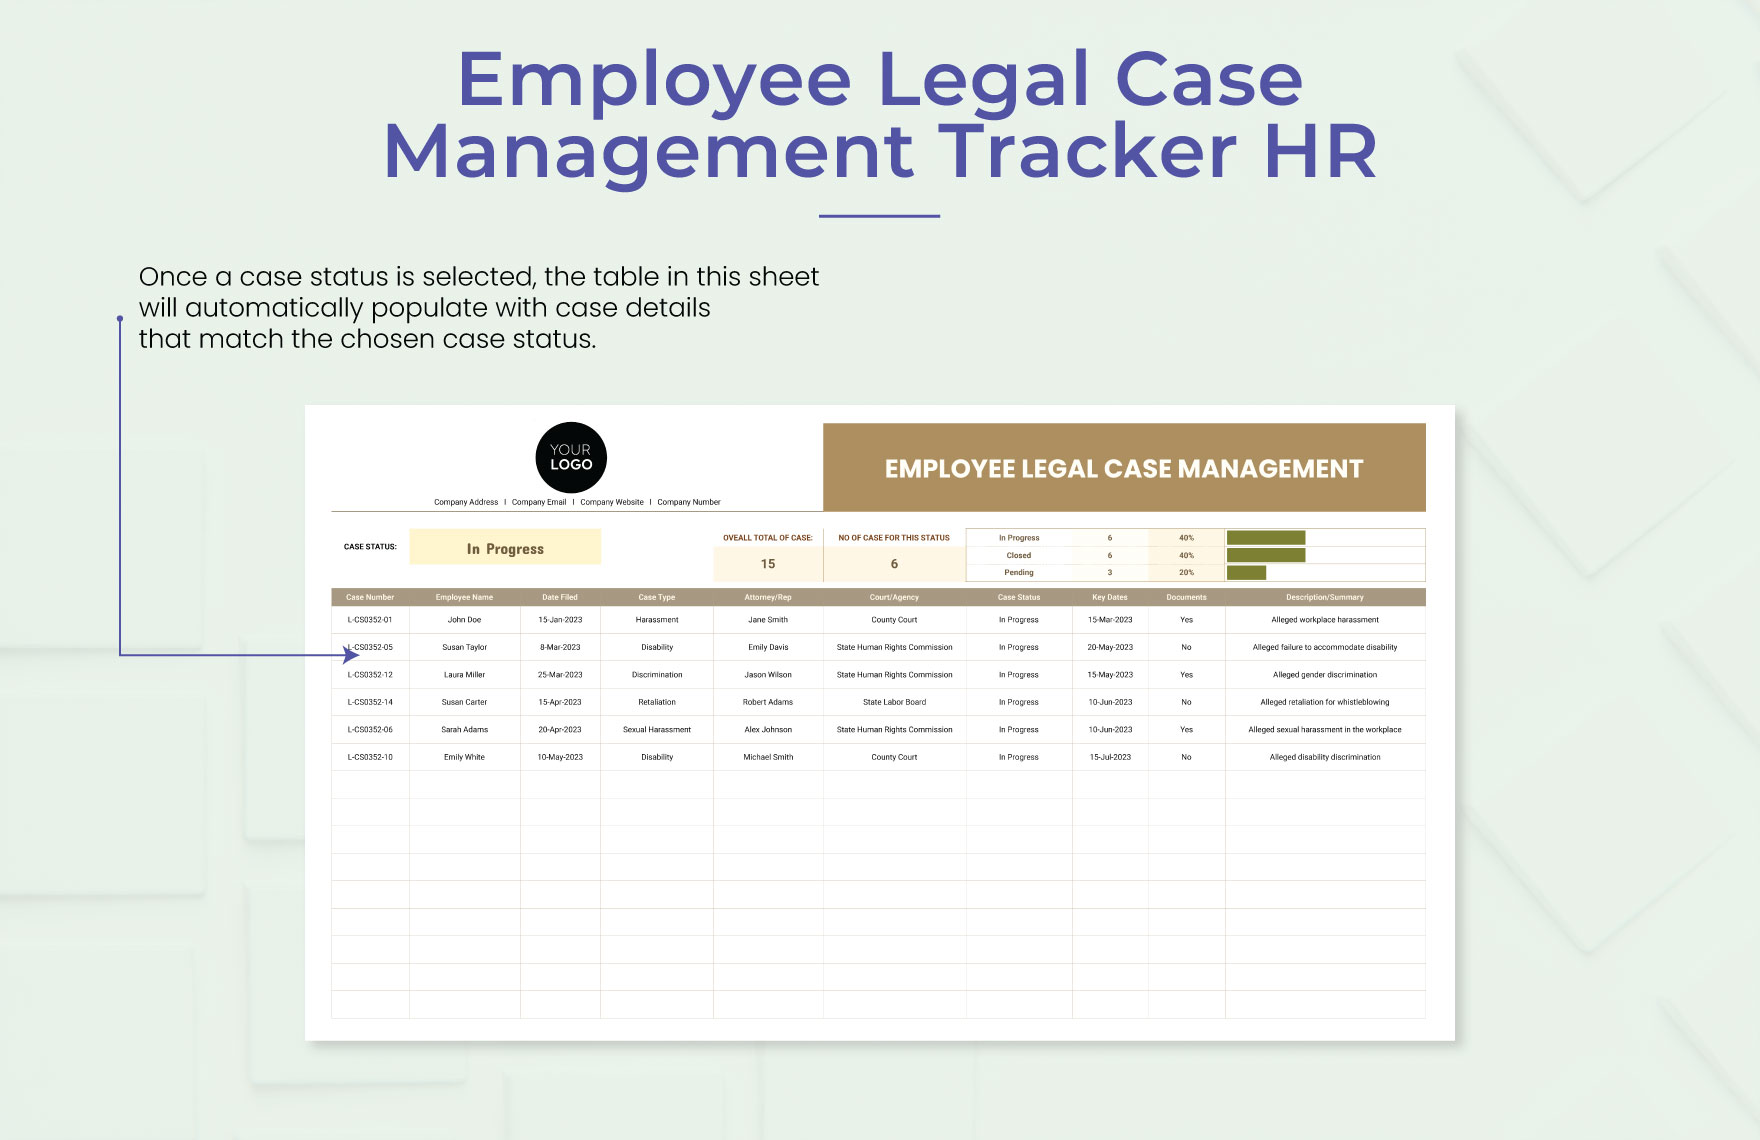 Employee Legal Case Management Tracker HR Template